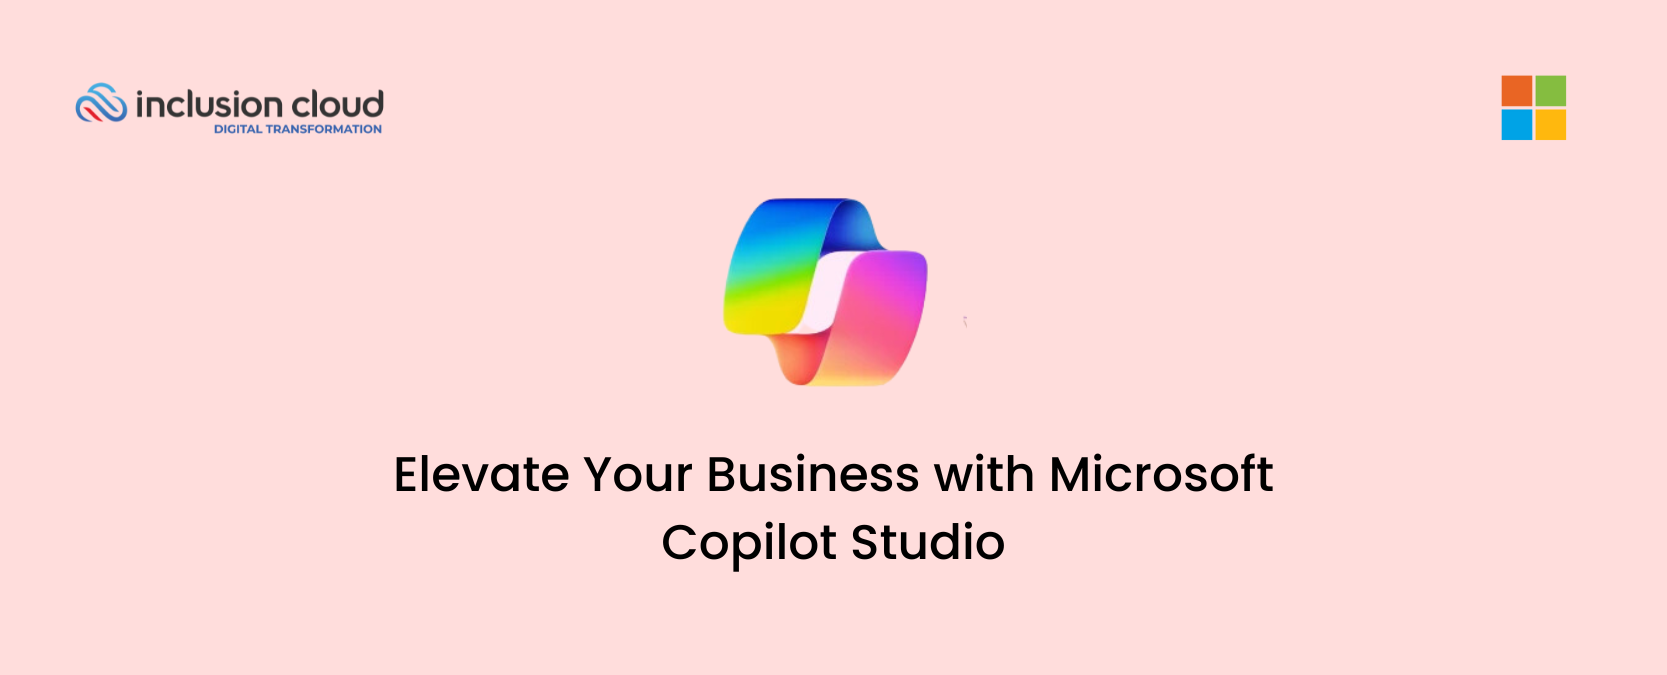 Microsoft Copilot Studio